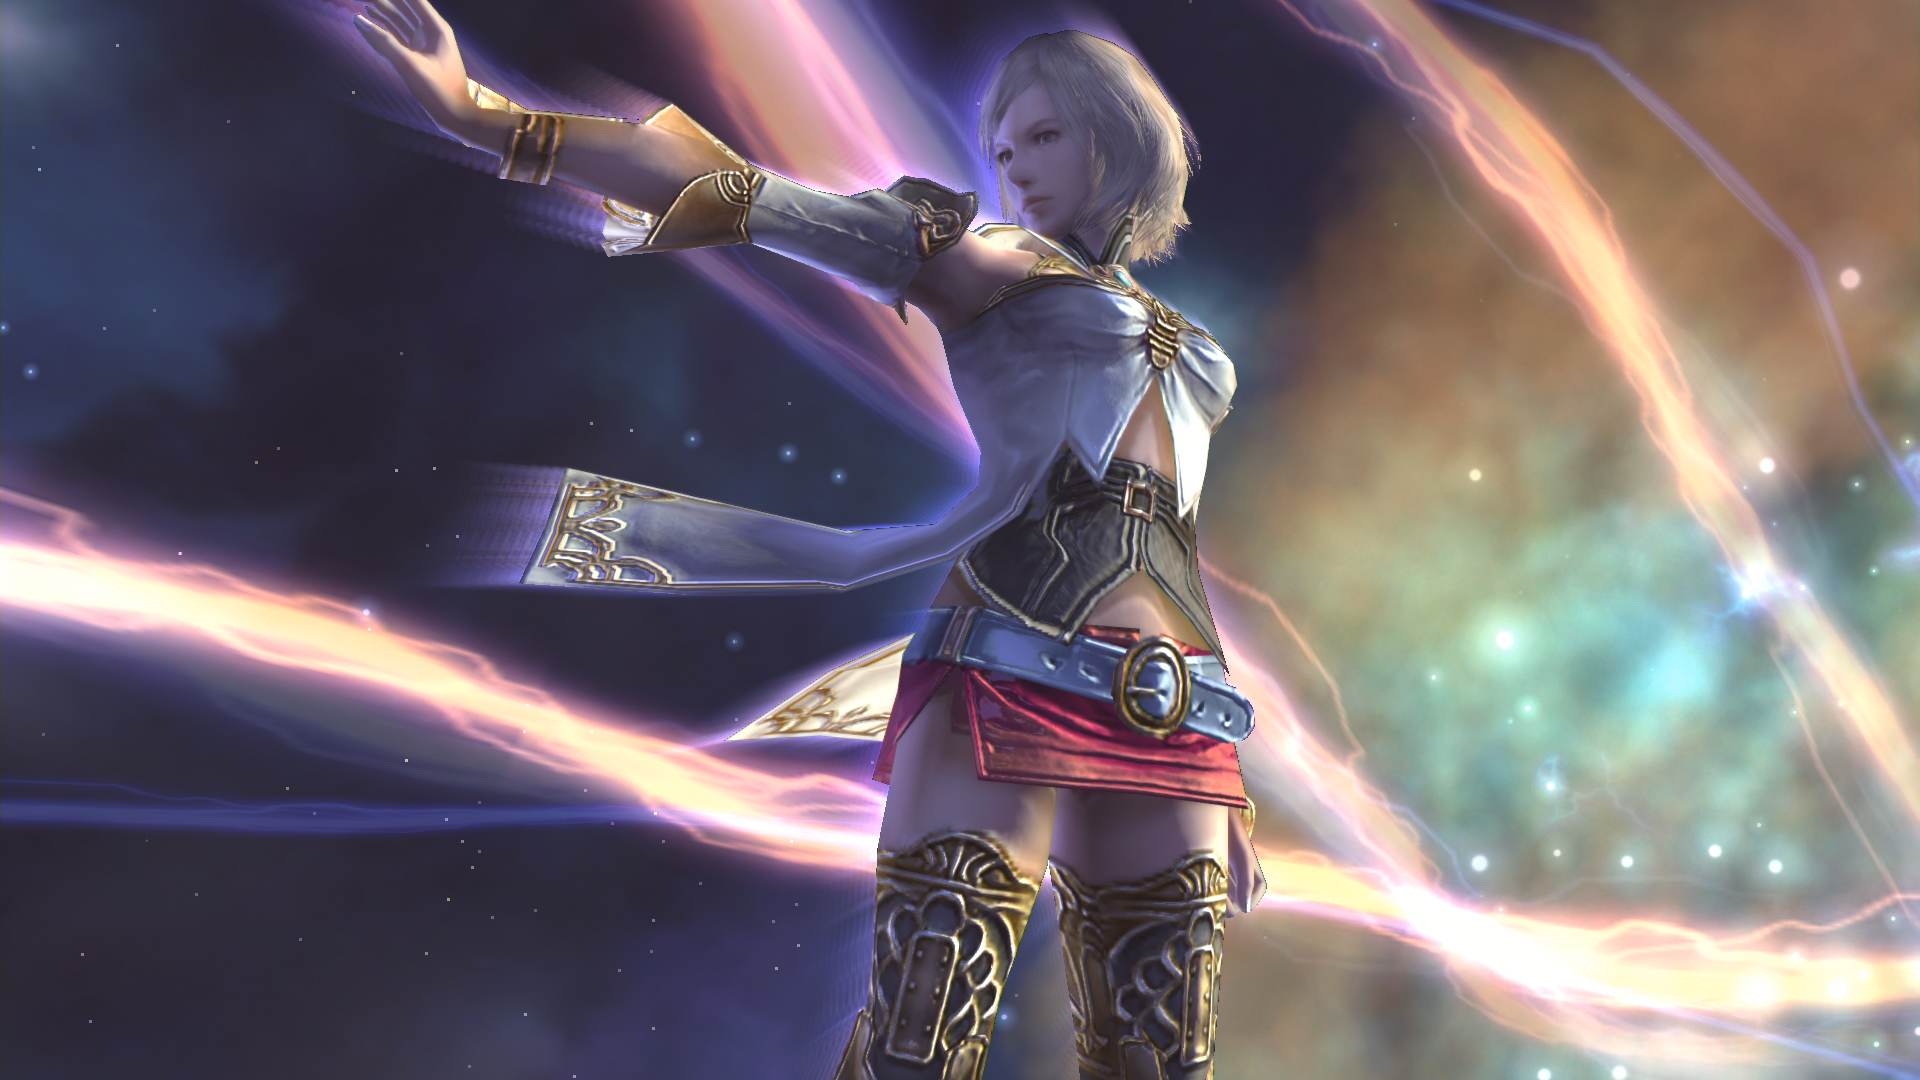 Final Fantasy XII: The Zodiac Age - Jul 11